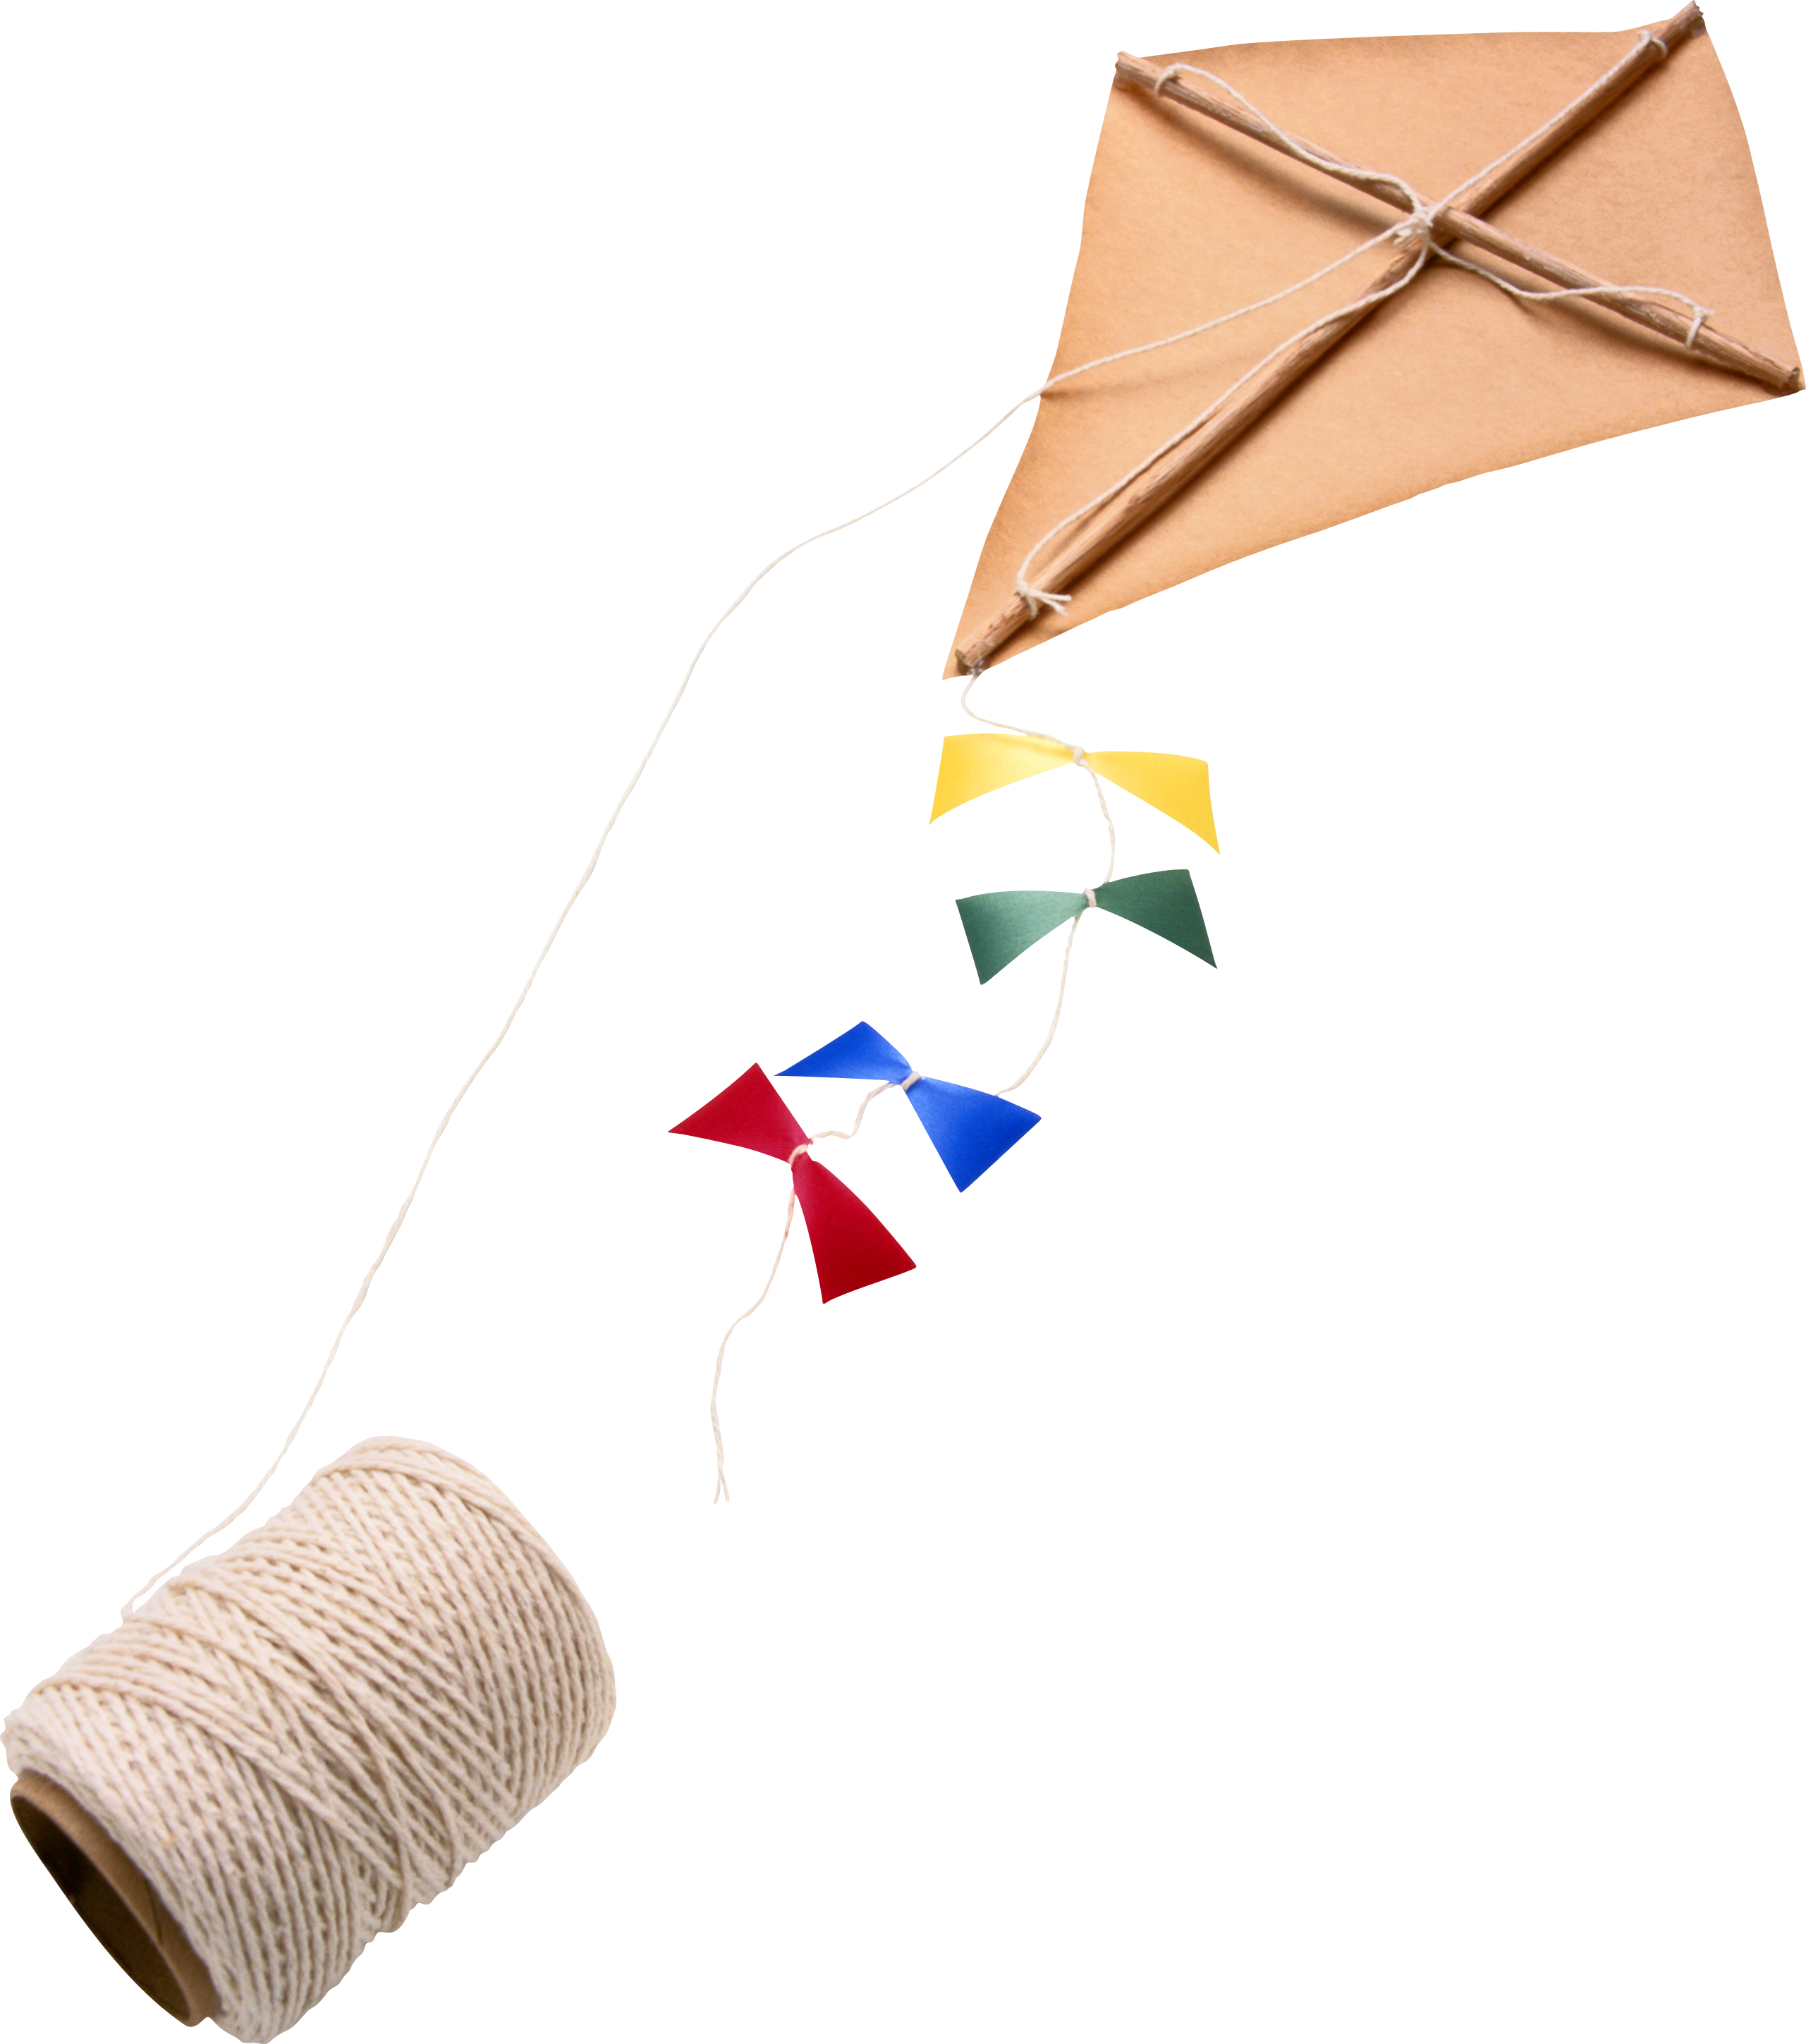 Kite Designs For Kids